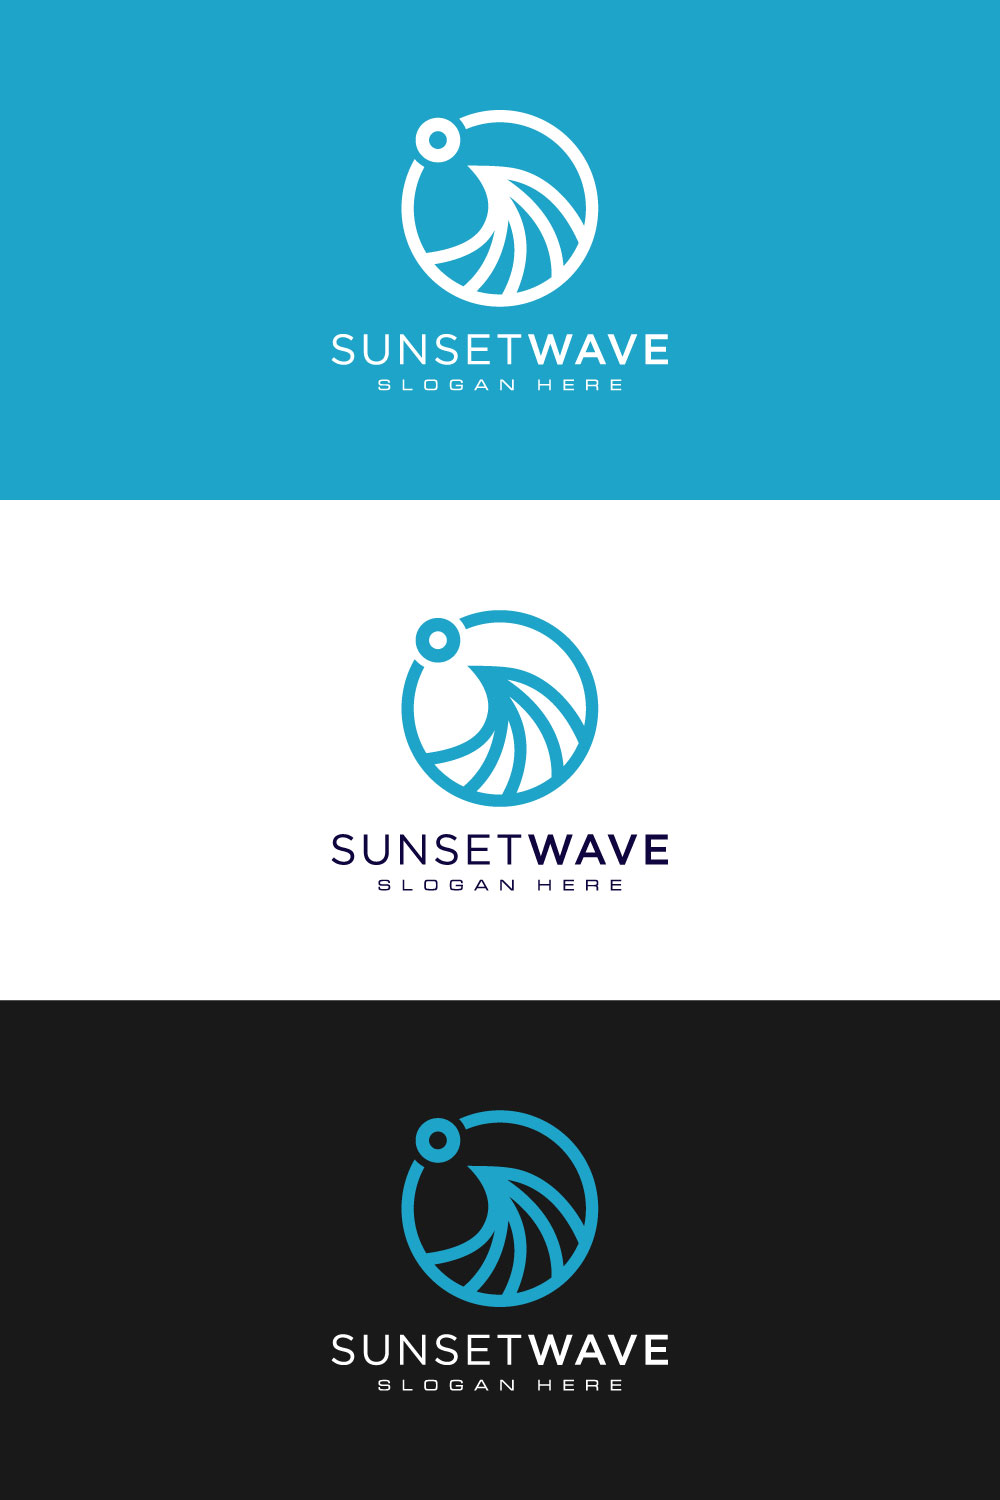 Sunset Wave Beautiful Logo Design Template Pinterest Image.